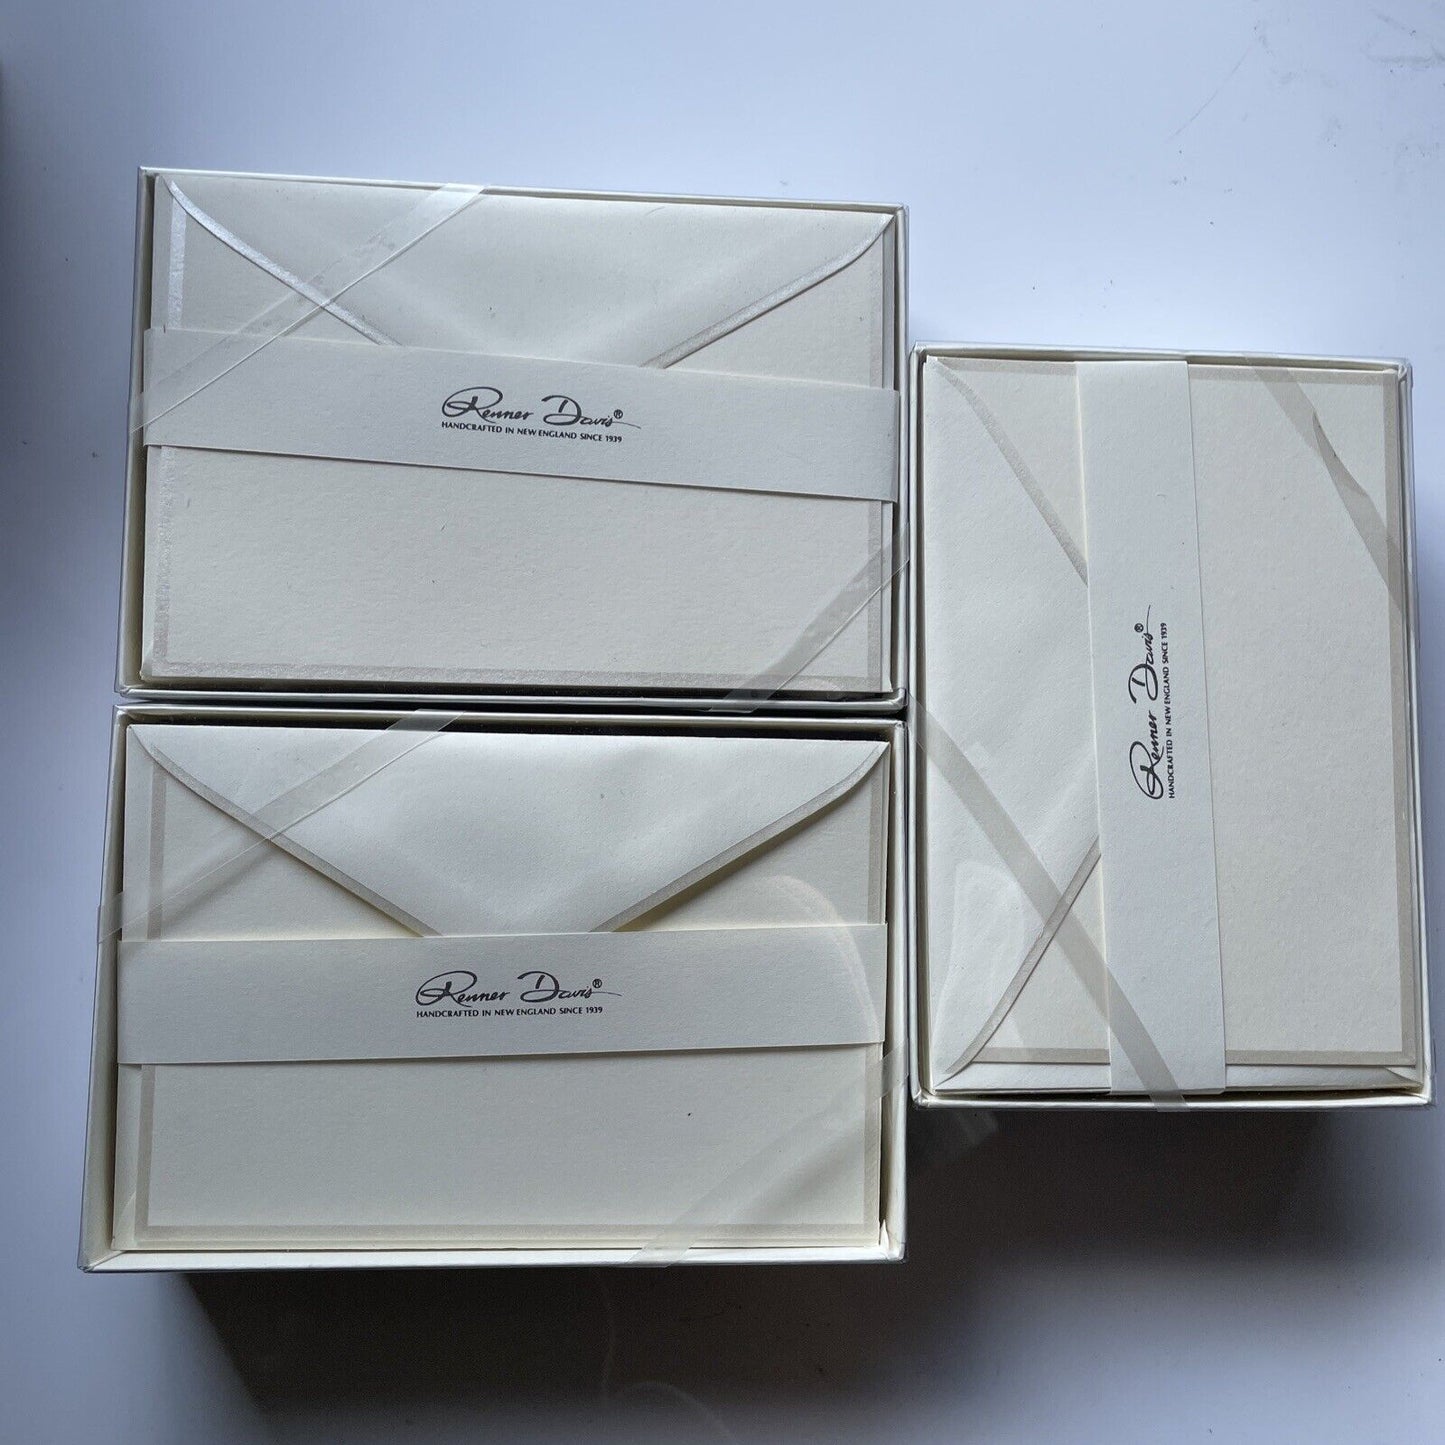 Lot Of 3 RENNER DAVIS Stationary 20 Handcrafted Cards & Envelopes 6-1/4x4-1/4”